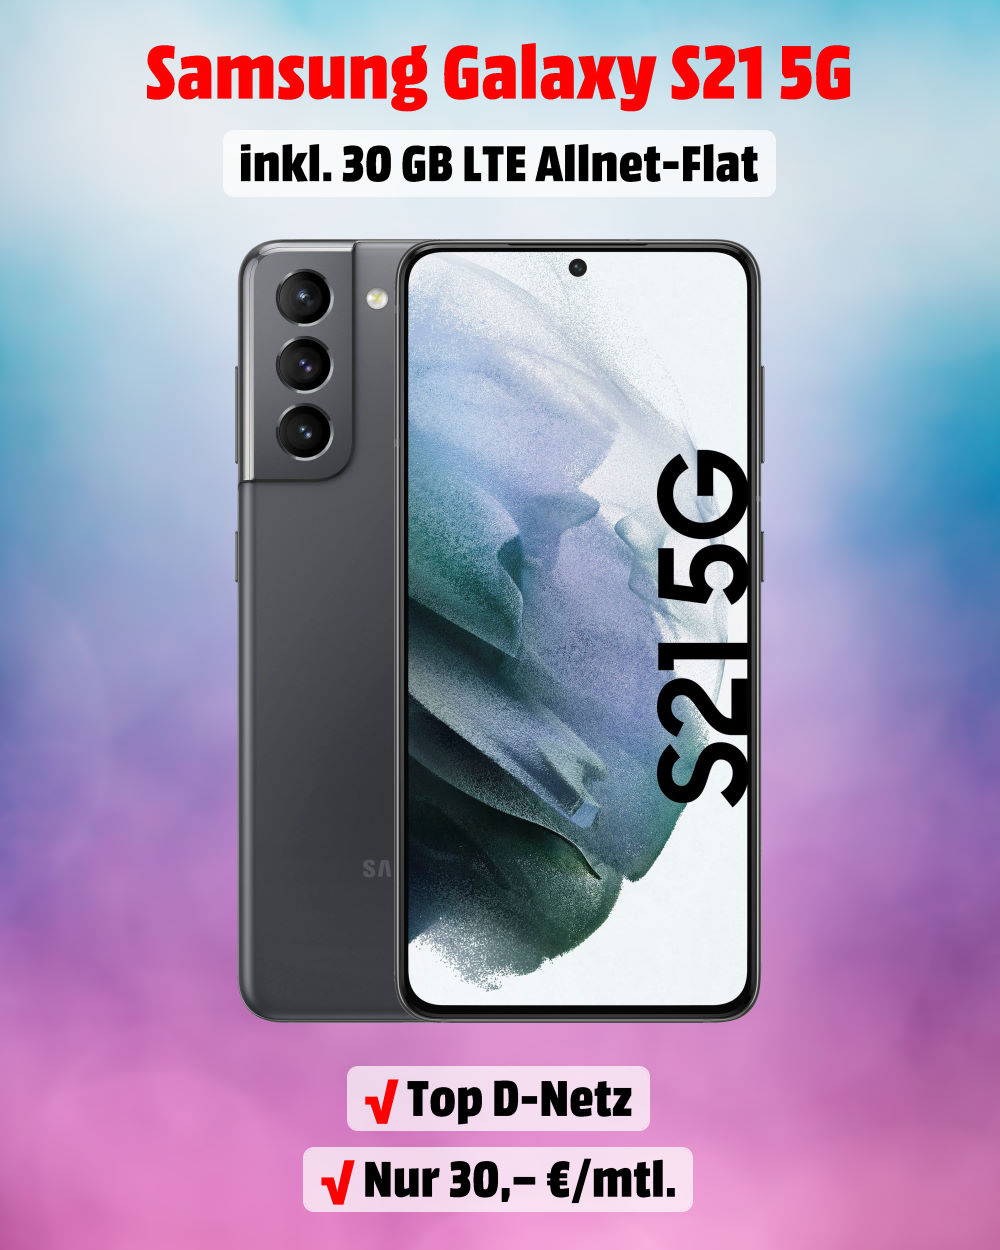 Galaxy S21 5G inkl. 30 GB LTE Allnet-Flat zum Mega-Tiefpreis